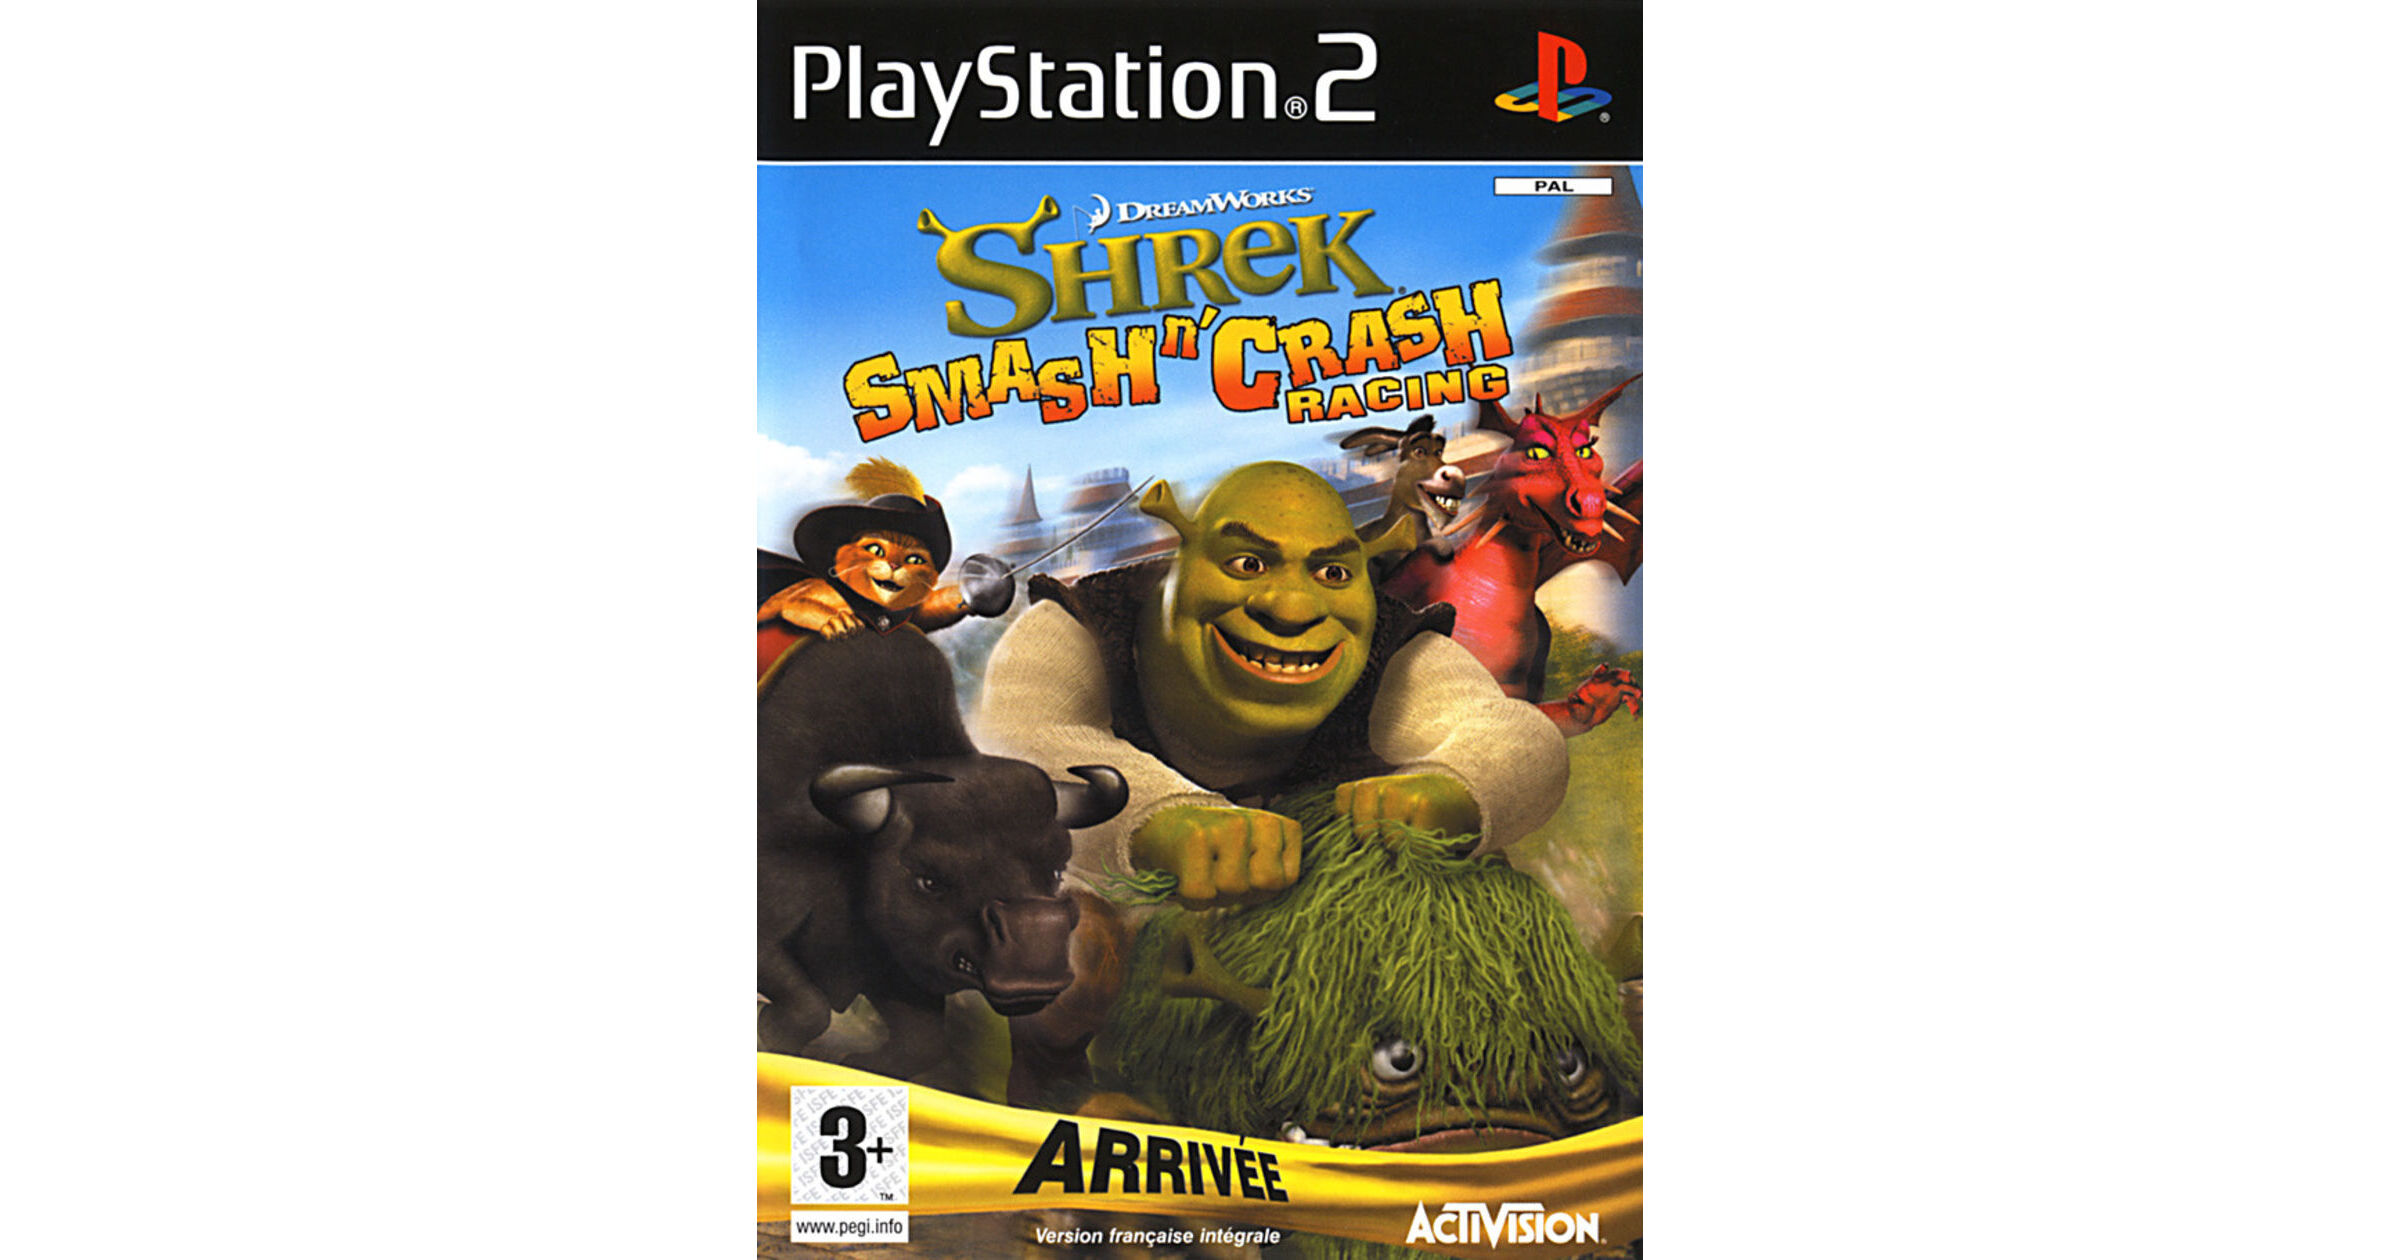 Shrek Smash N Crash Racing (Nintendo DS) - PAL - New